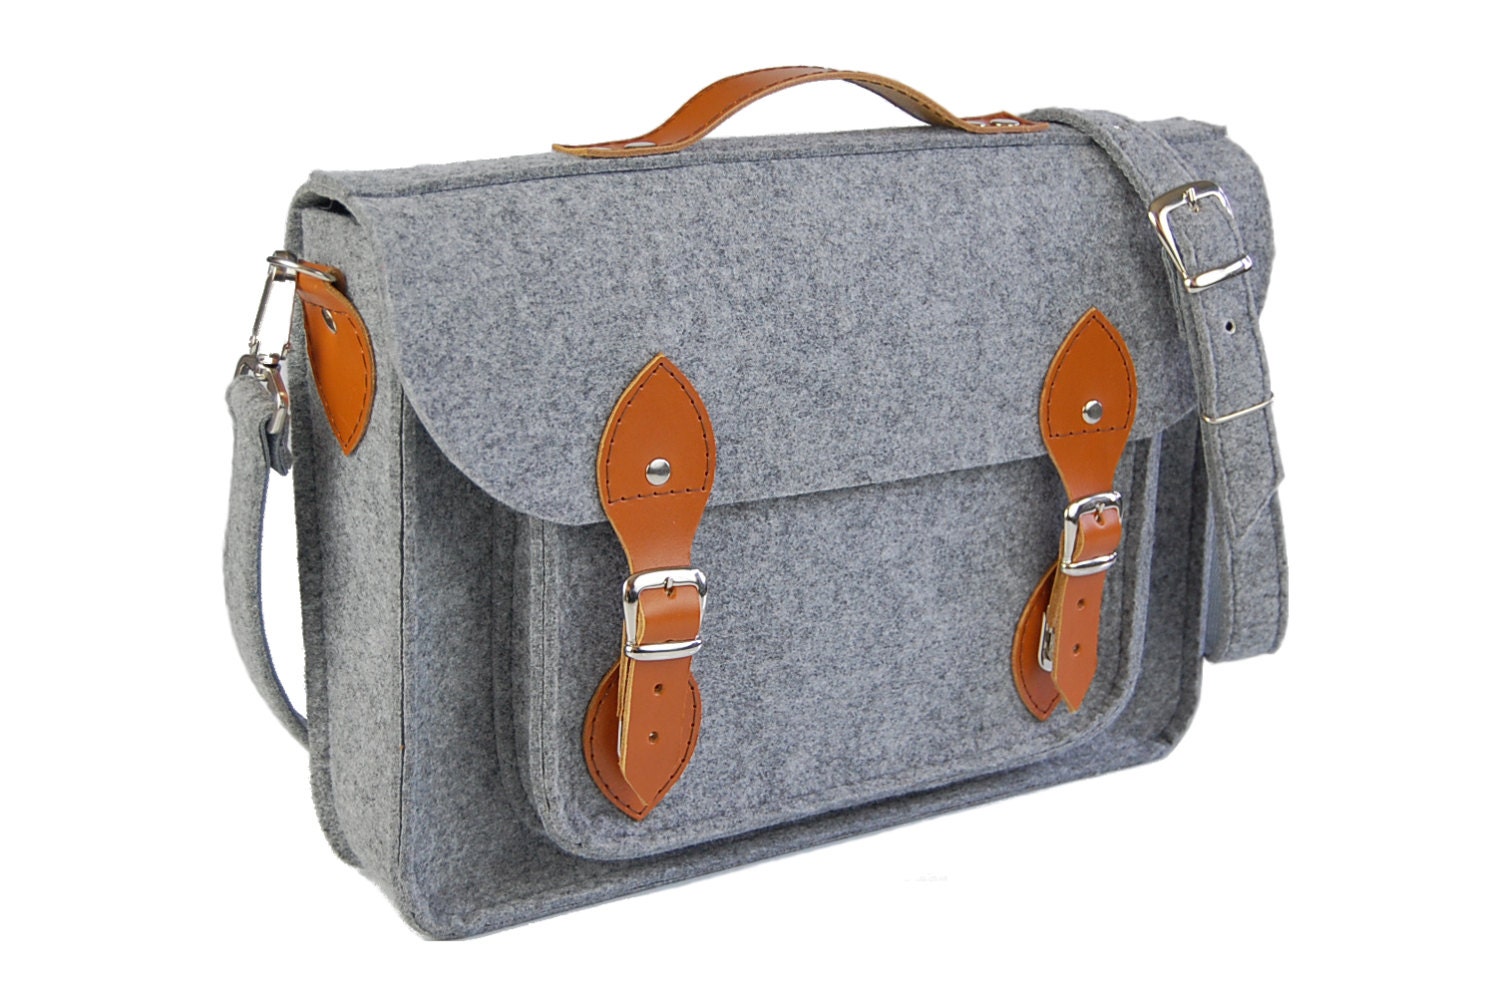 Felt Laptop 17 inch bag with pocket satchel Macbook Pro 17 | Etsy